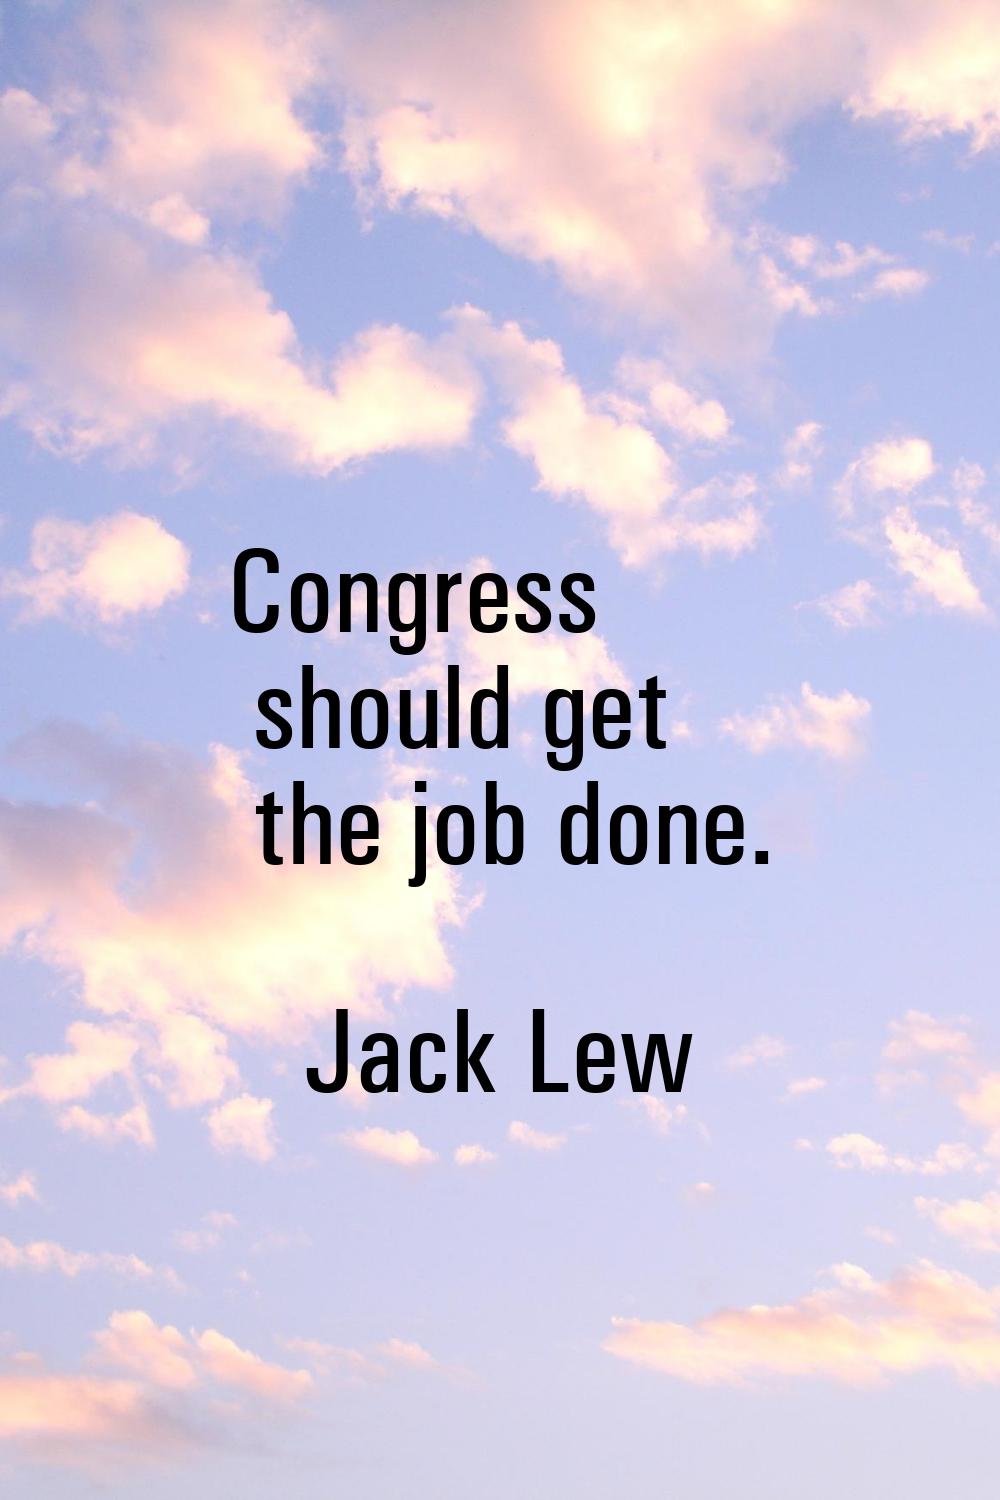 Congress should get the job done.